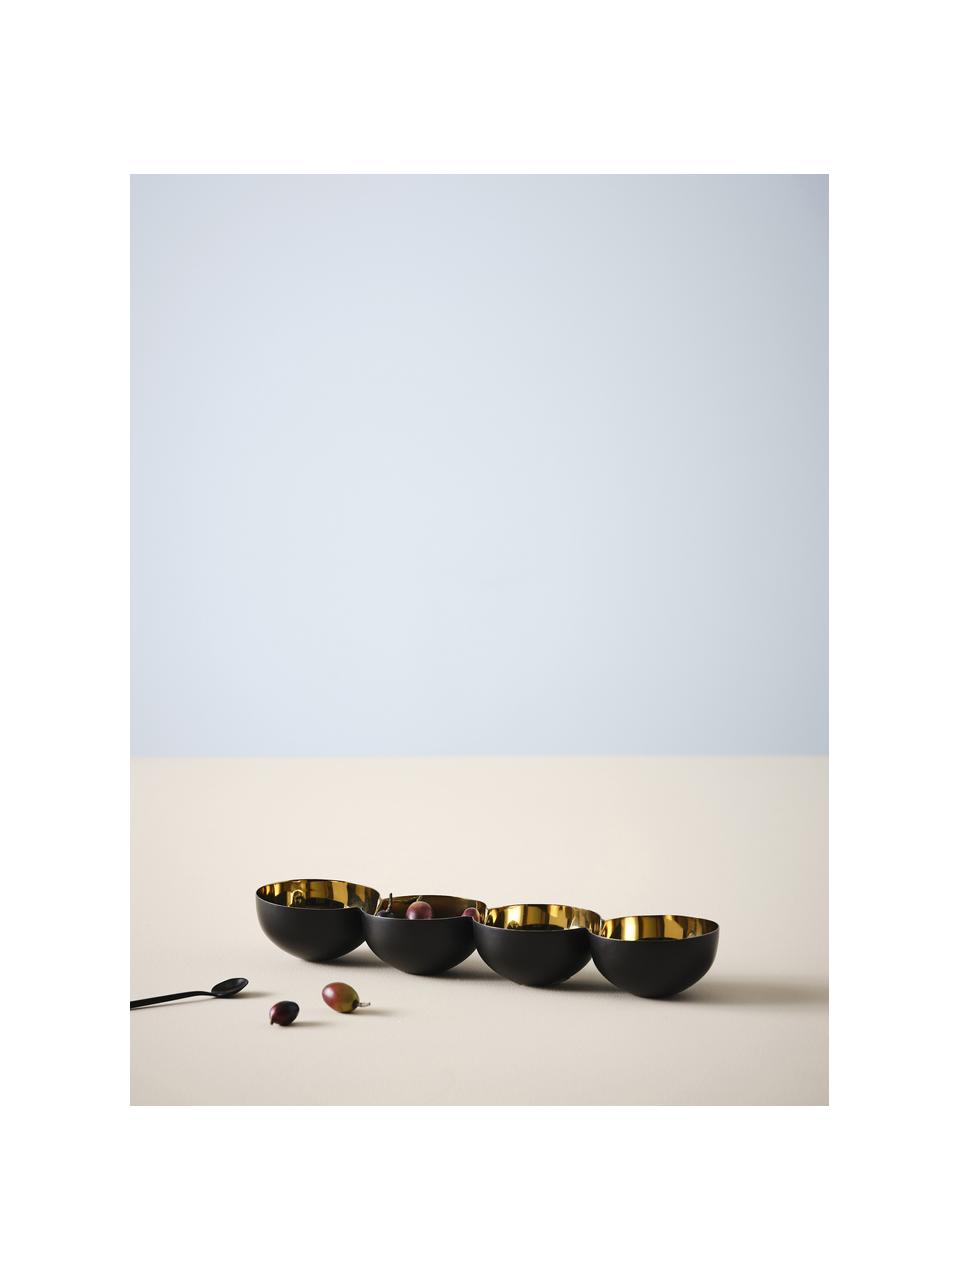 Servier-Set Lola, Aluminium, beschichtet, Goldfarben, Schwarz, B 40 x H 5 cm